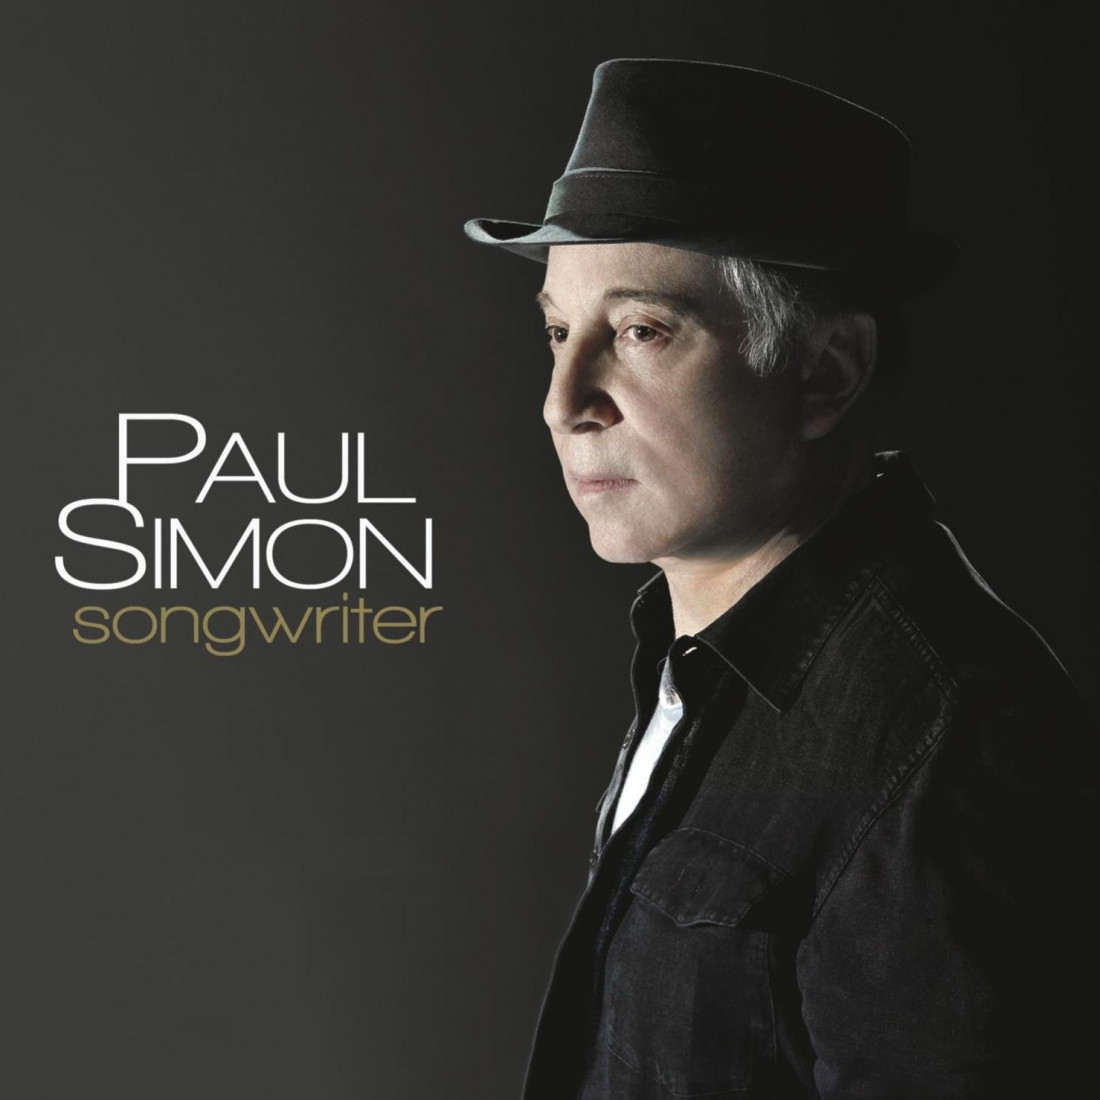 [Paul Simon] American Tune (Songwriter) Photo-Image